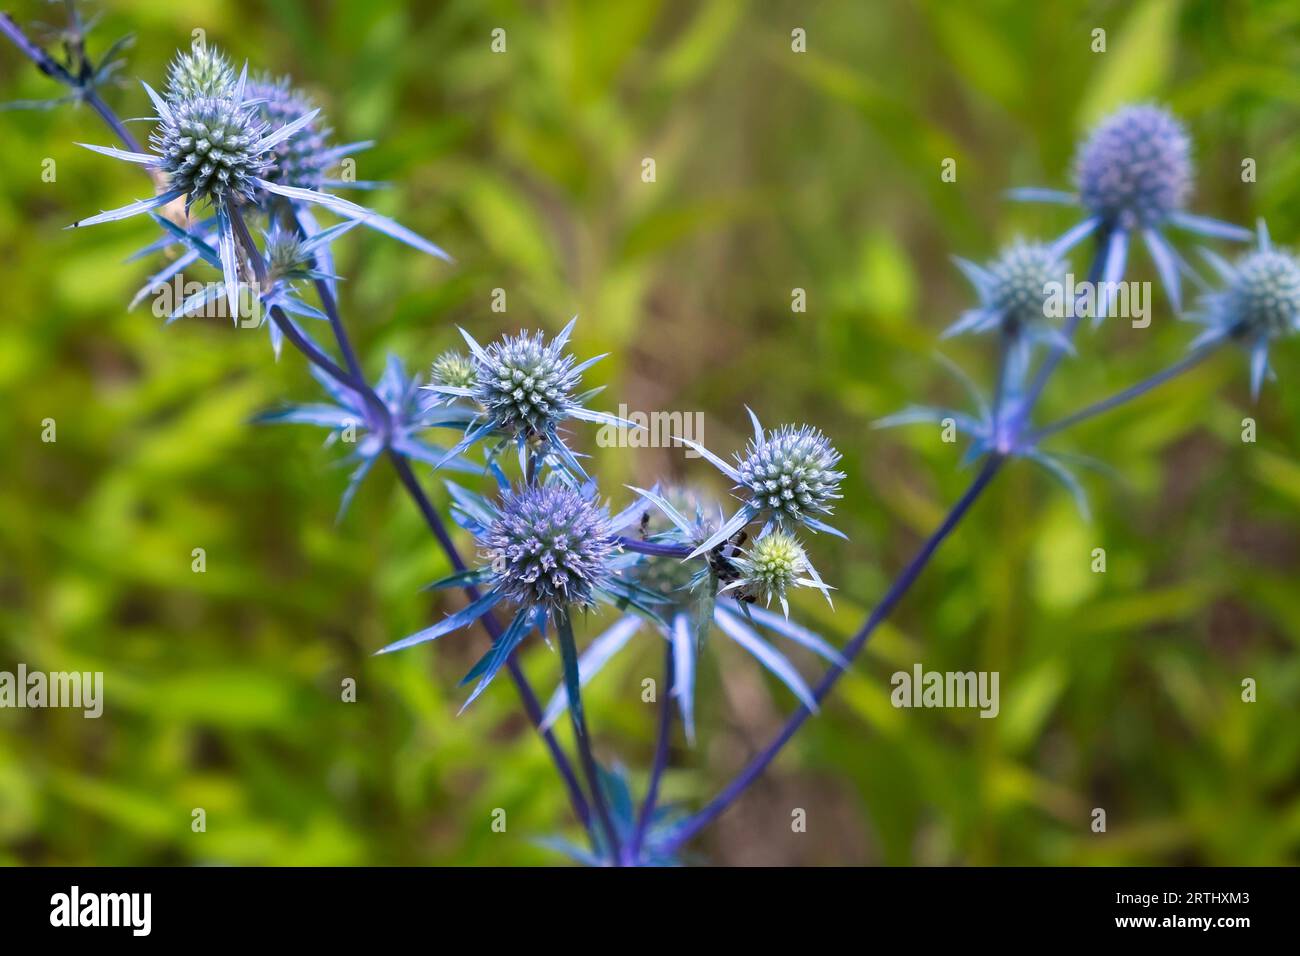 Eryngium planum, blue prickly healing plant in garden. Medicinal natural herbs, summer season Stock Photo